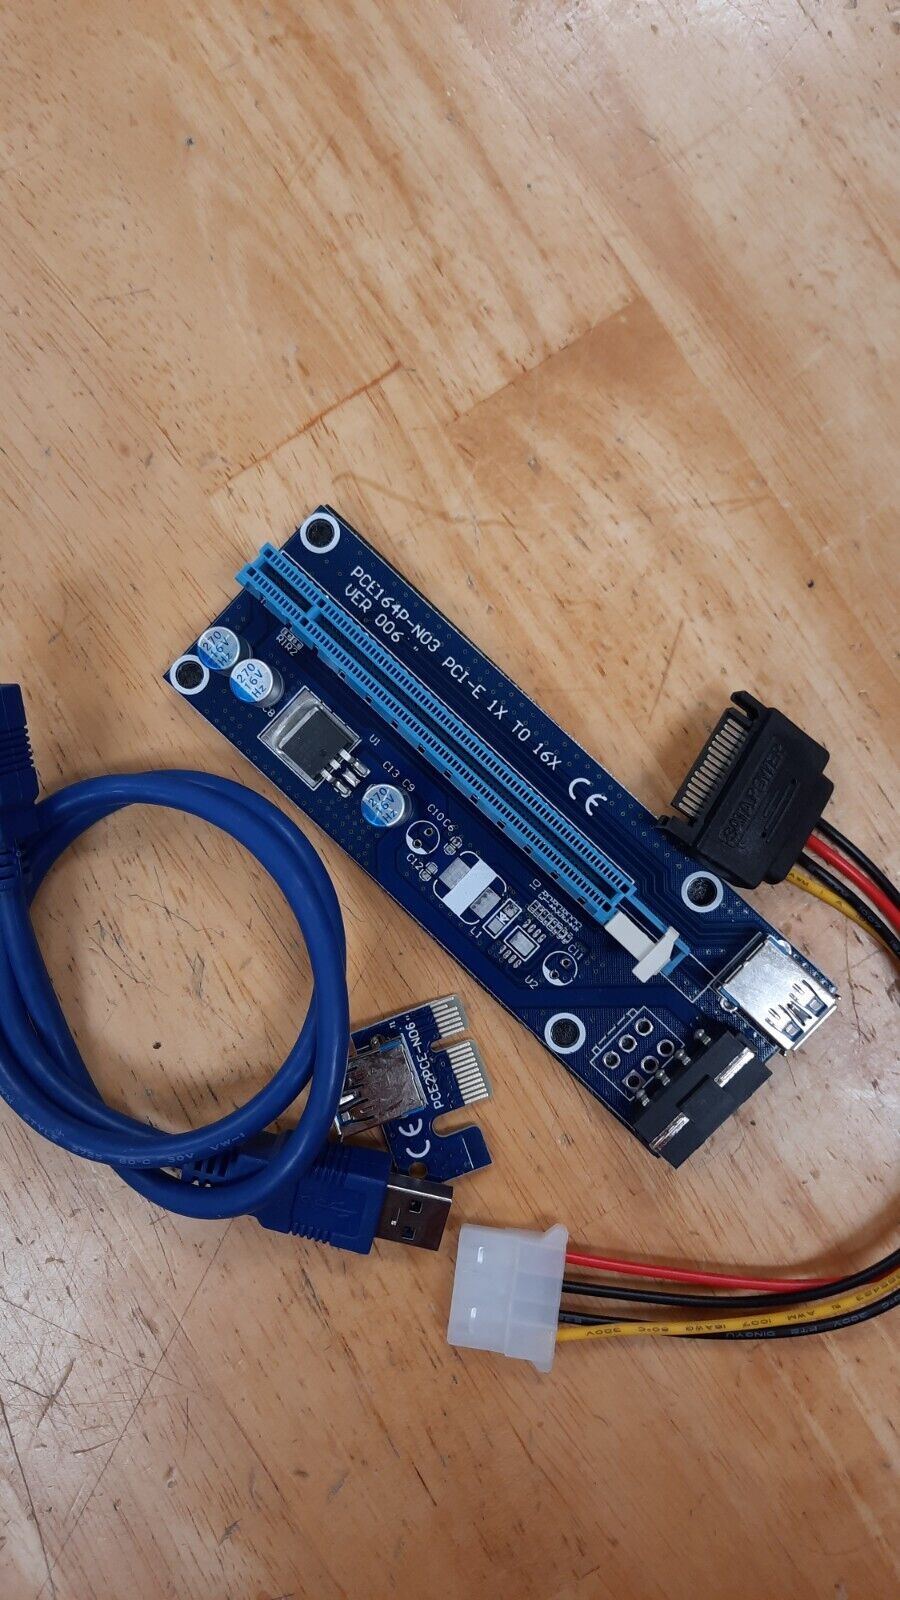 Mining PCIe Riser VER006 PCI-E 1x to 16x USB riser adapter